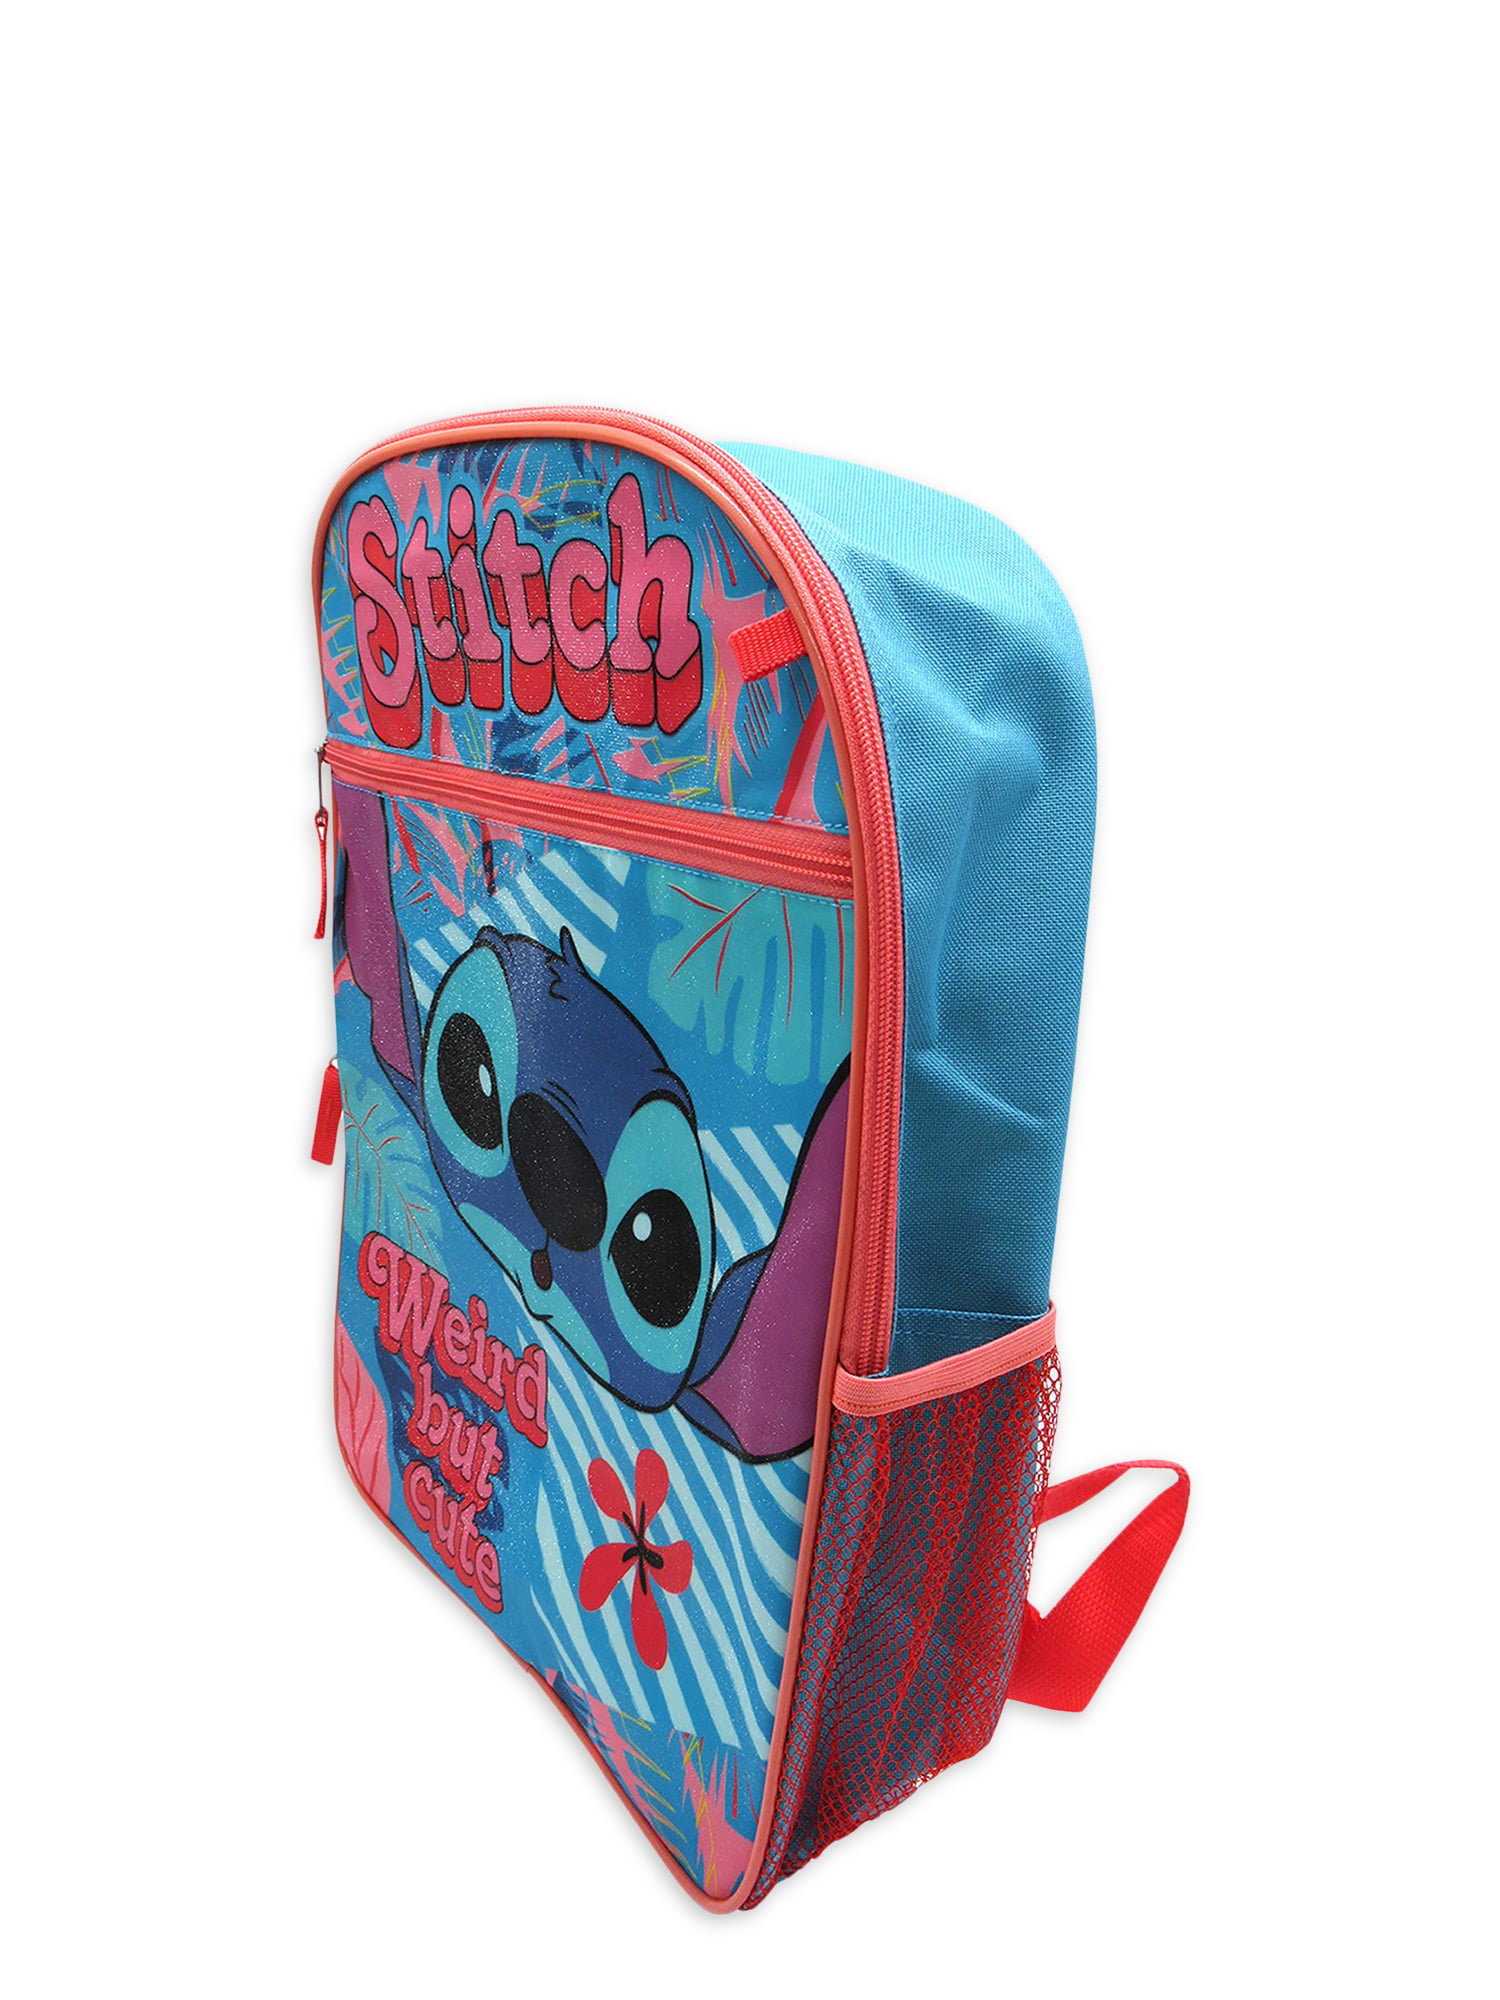 Lilo & Stitch Lunch Box - Bundle with Lilo & Stitch Lunch Bag, Water Bottle, Stitch Stickers | Lilo & Stitch Lunch Container